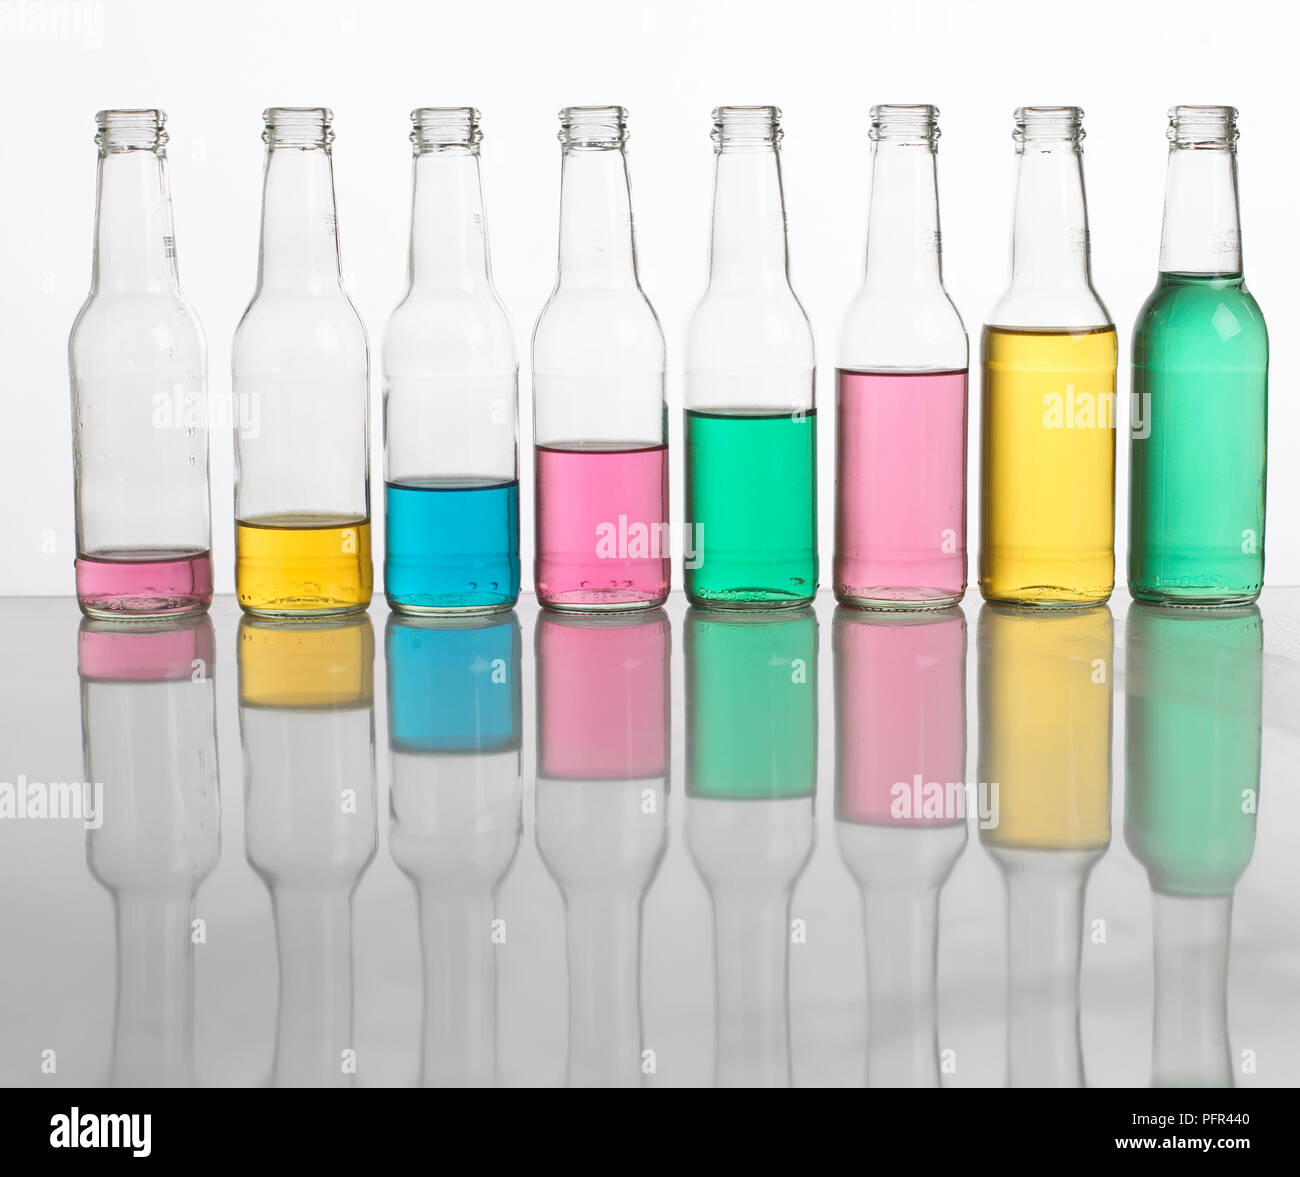 "Tubos de botella' o 'botella' xilófono, botellas llenas con diferentes cantidades de agua coloreada, alineadas en una fila Foto de stock